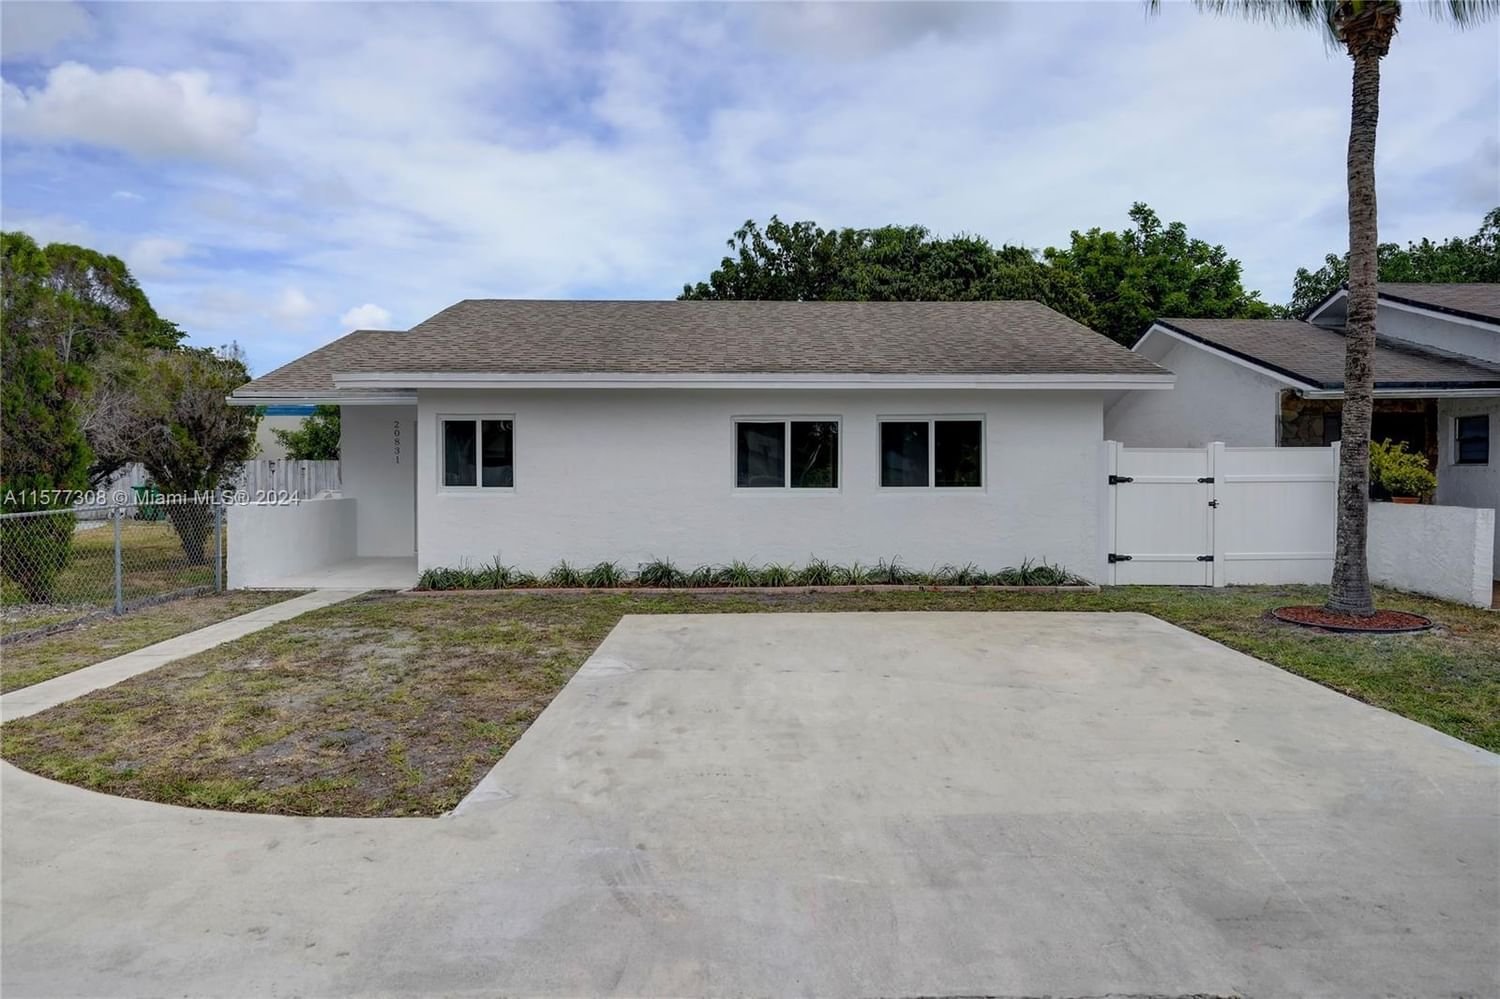 Real estate property located at 20831 28th Ave, Miami-Dade County, FAIRLAND GARDENS, Miami Gardens, FL